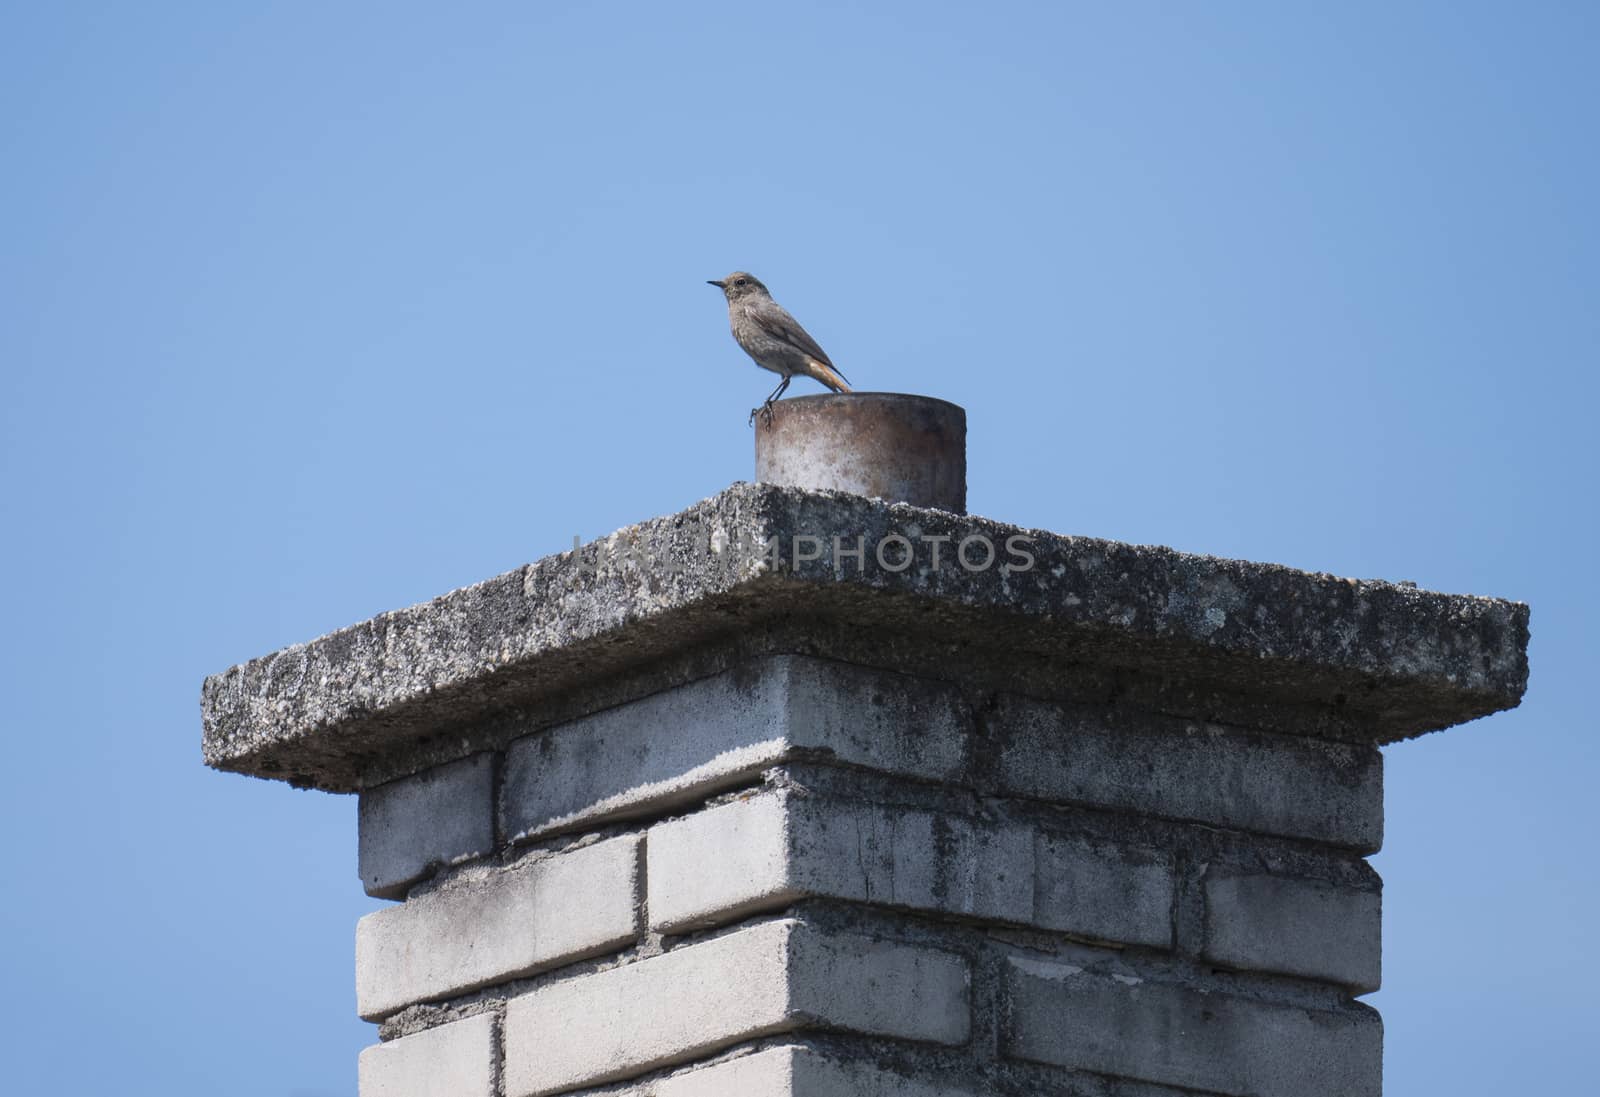 Female Black redstart Phoenicurus ochruros perched on brick chimney with blue sky background by Henkeova